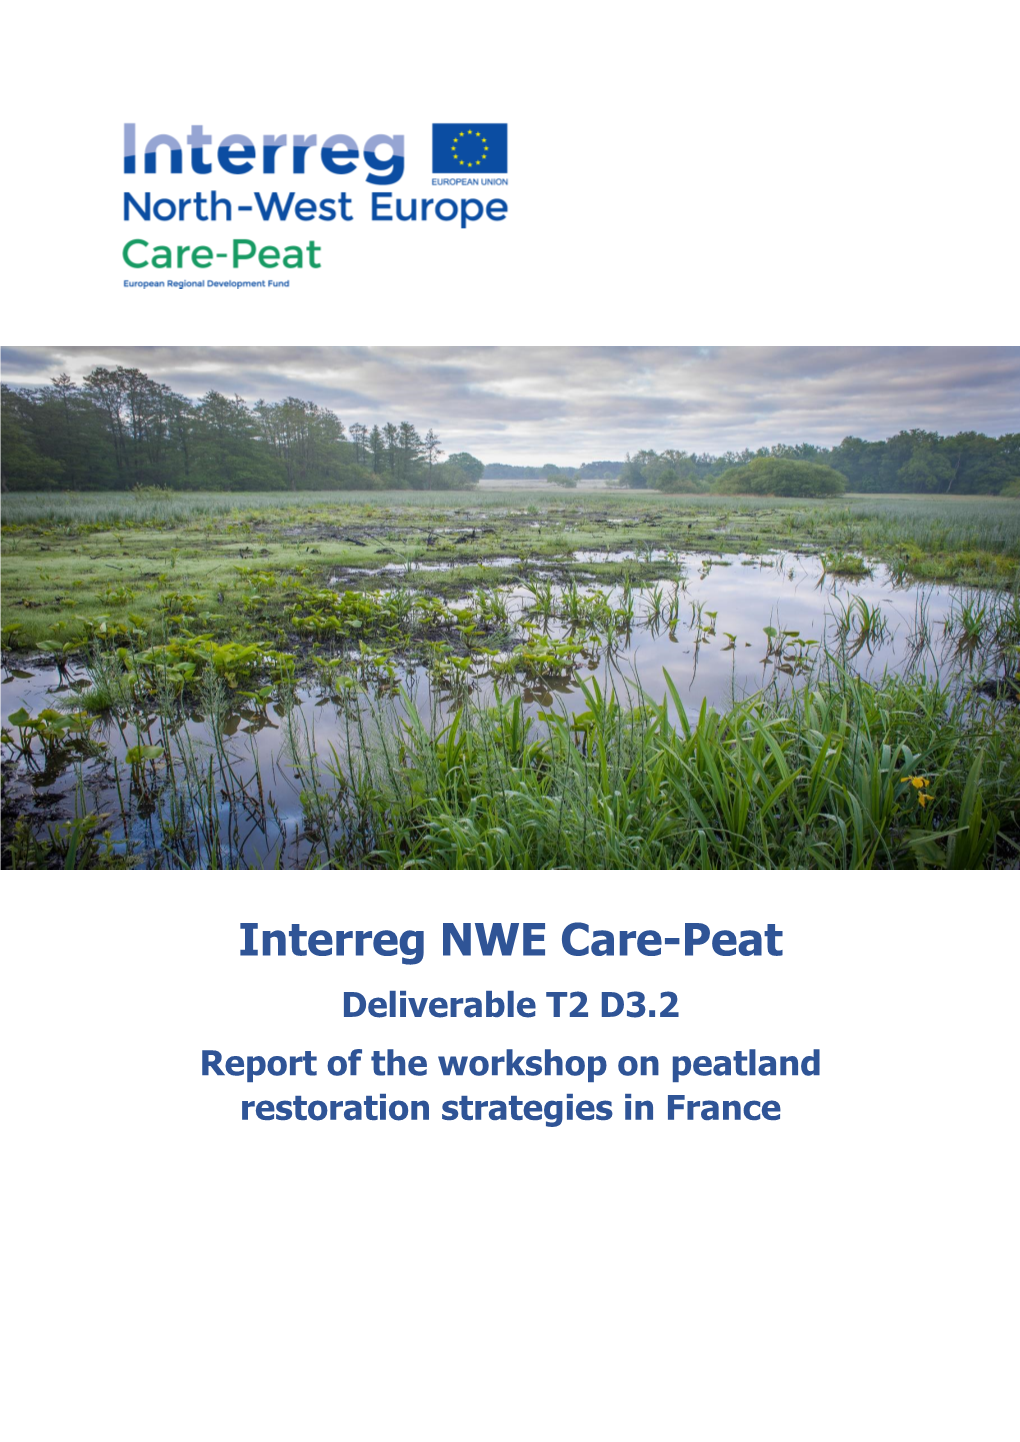 Interreg NWE Care-Peat Deliverable T2 D3.2 Report of the Workshop on Peatland Restoration Strategies in France